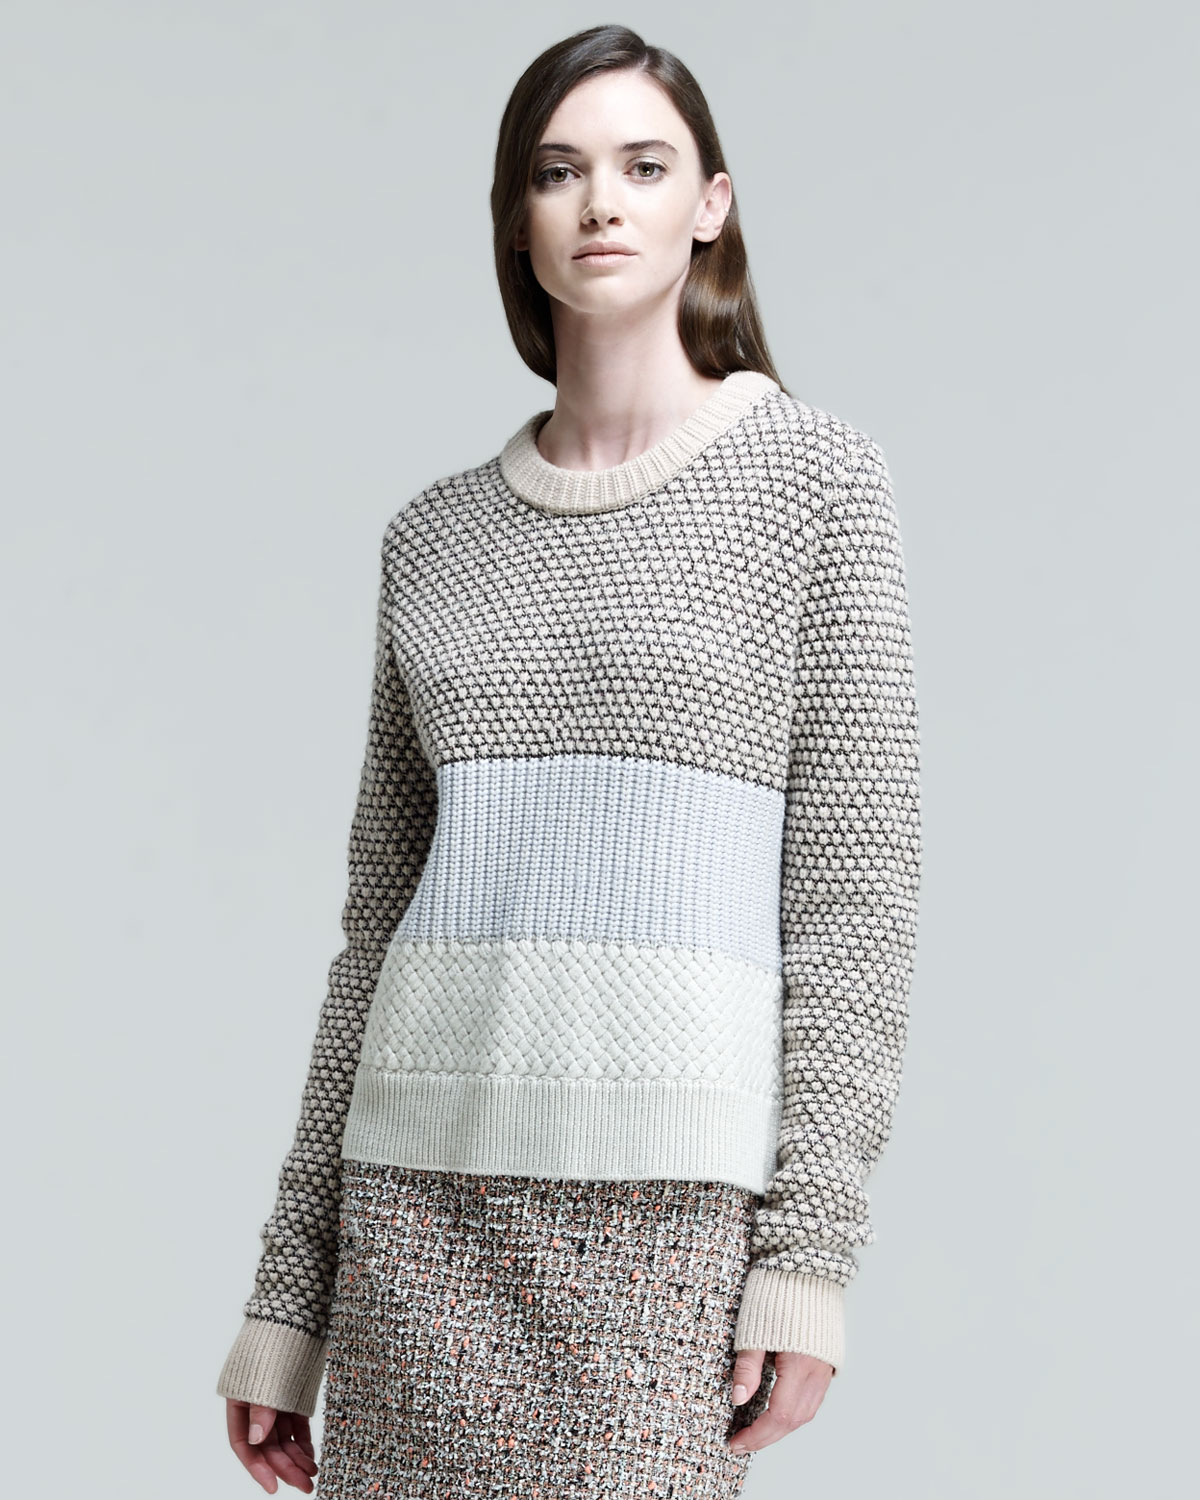 Lyst - Proenza schouler Paneled Mixedknit Sweater in Gray